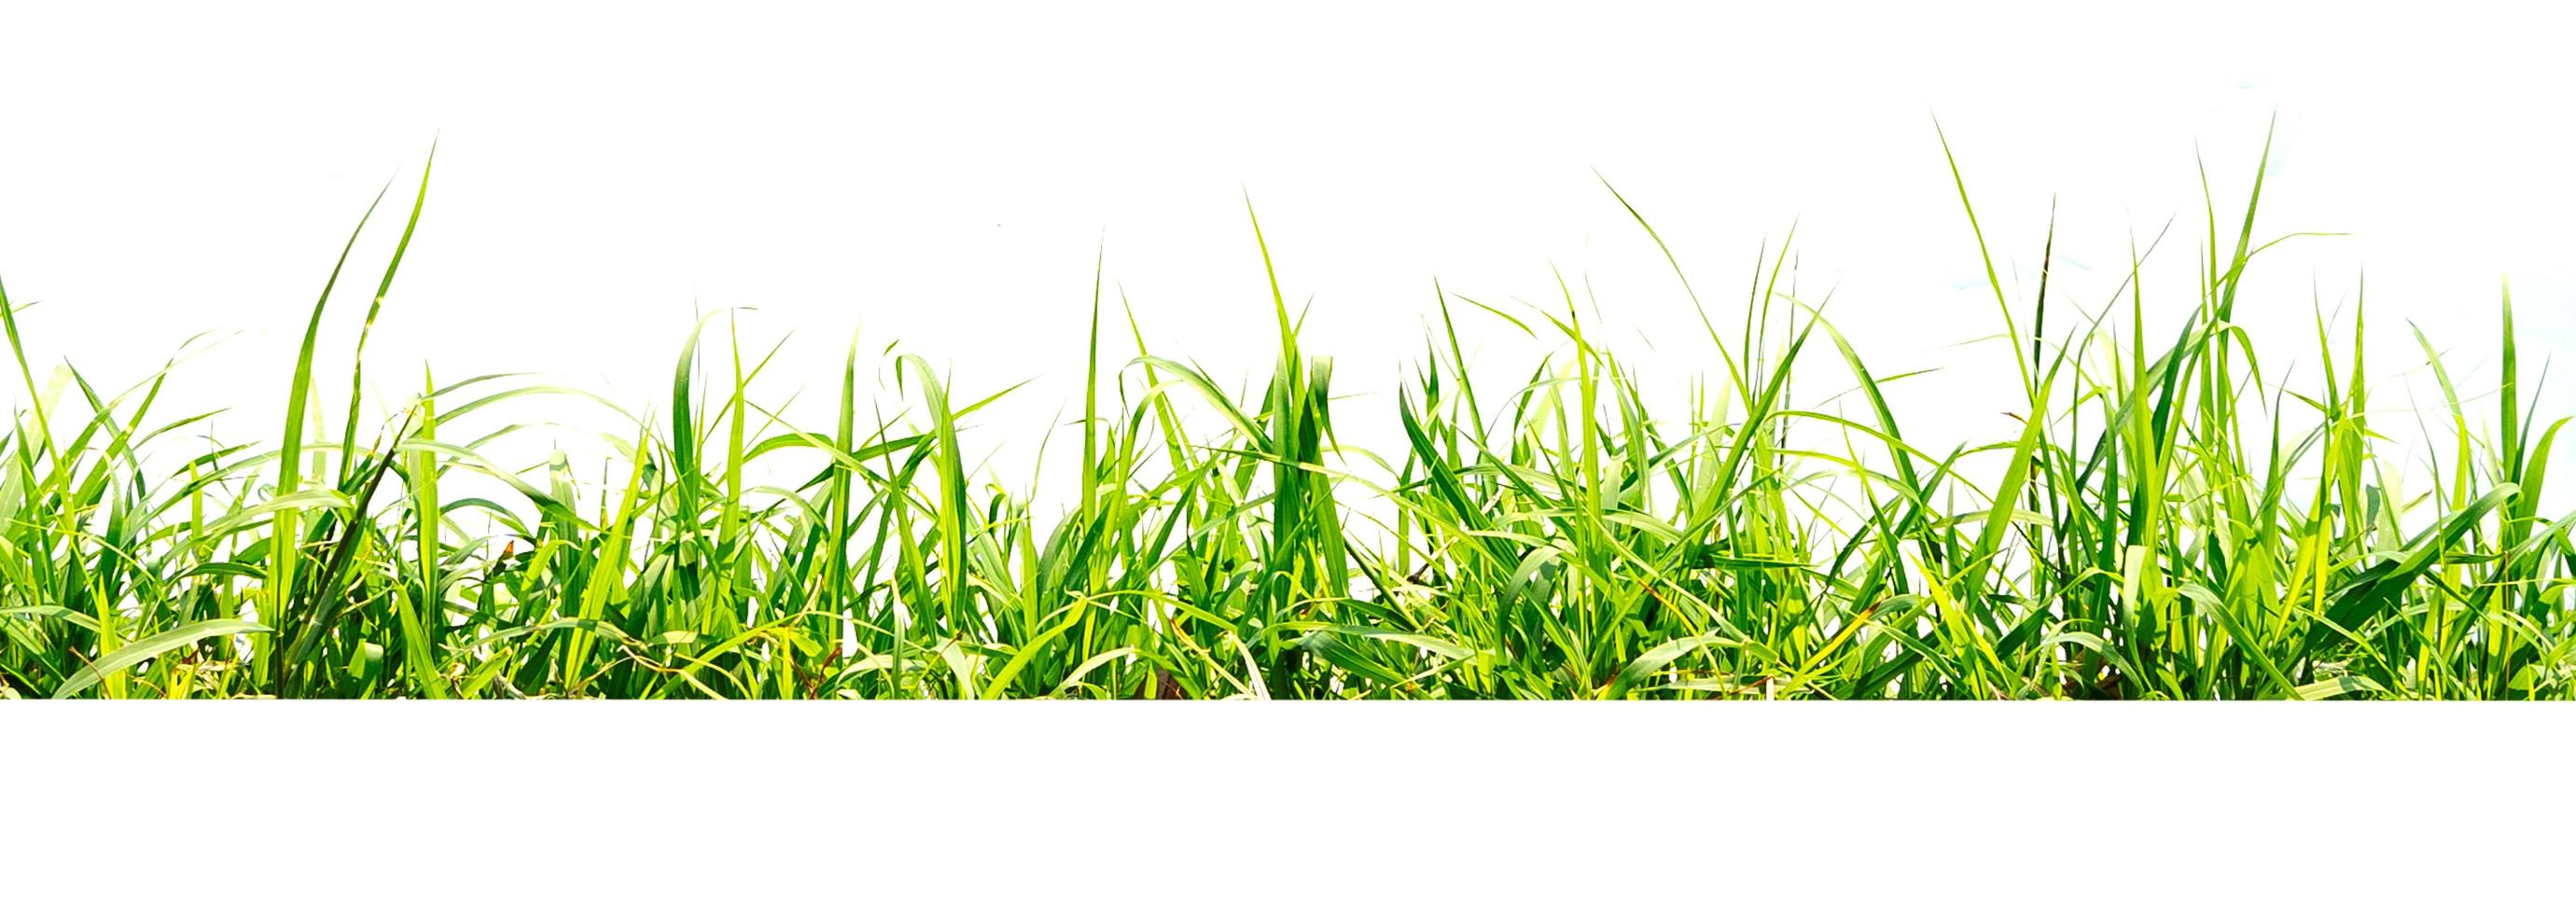 grama verde isolar no fundo branco foto